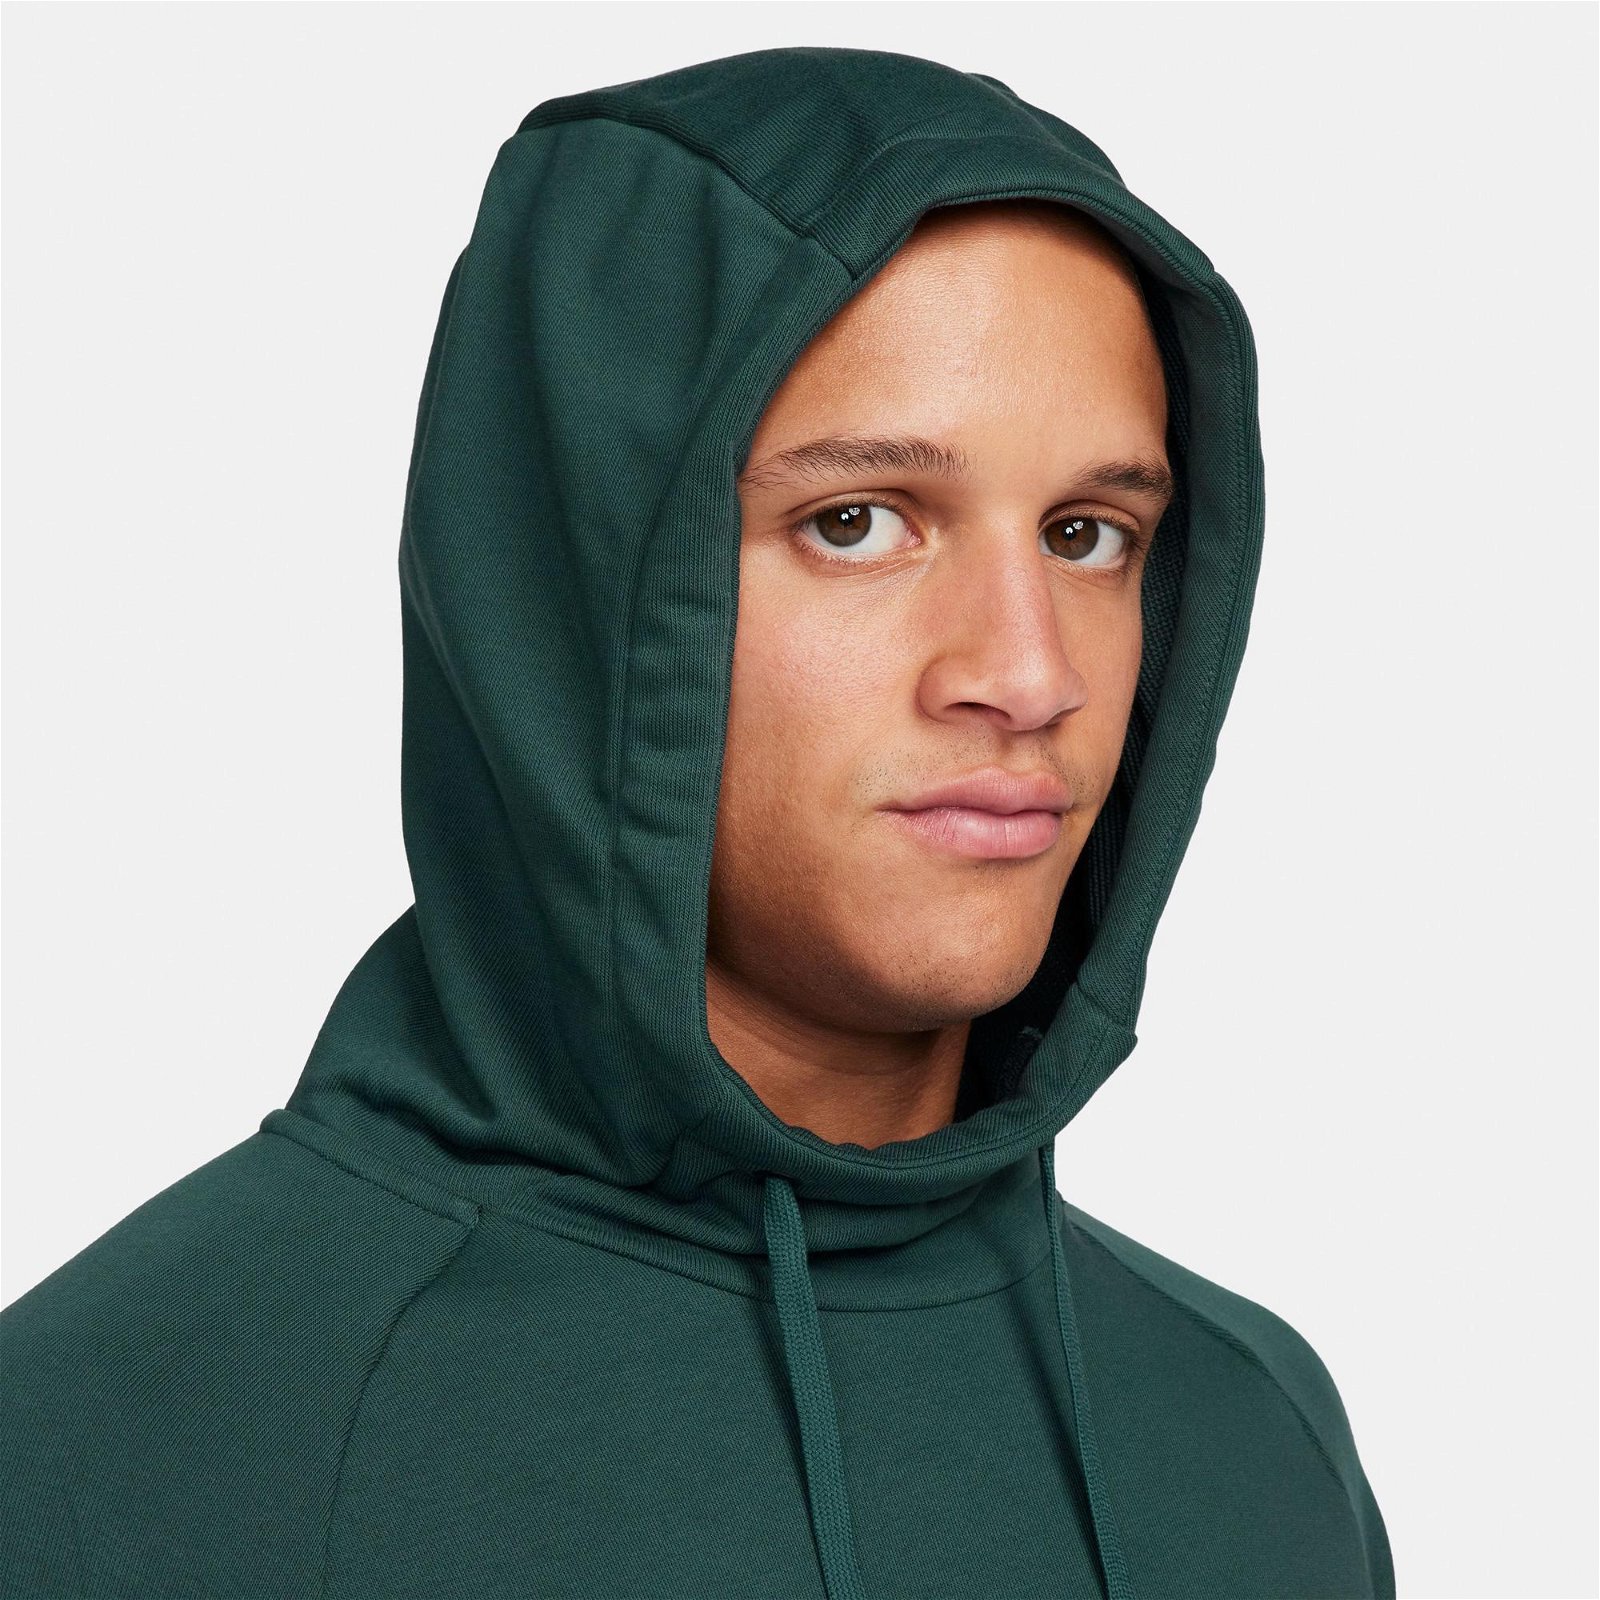 Nike Dri-FIT Hooded Fitness Pullover Erkek Yeşil Sweatshirt